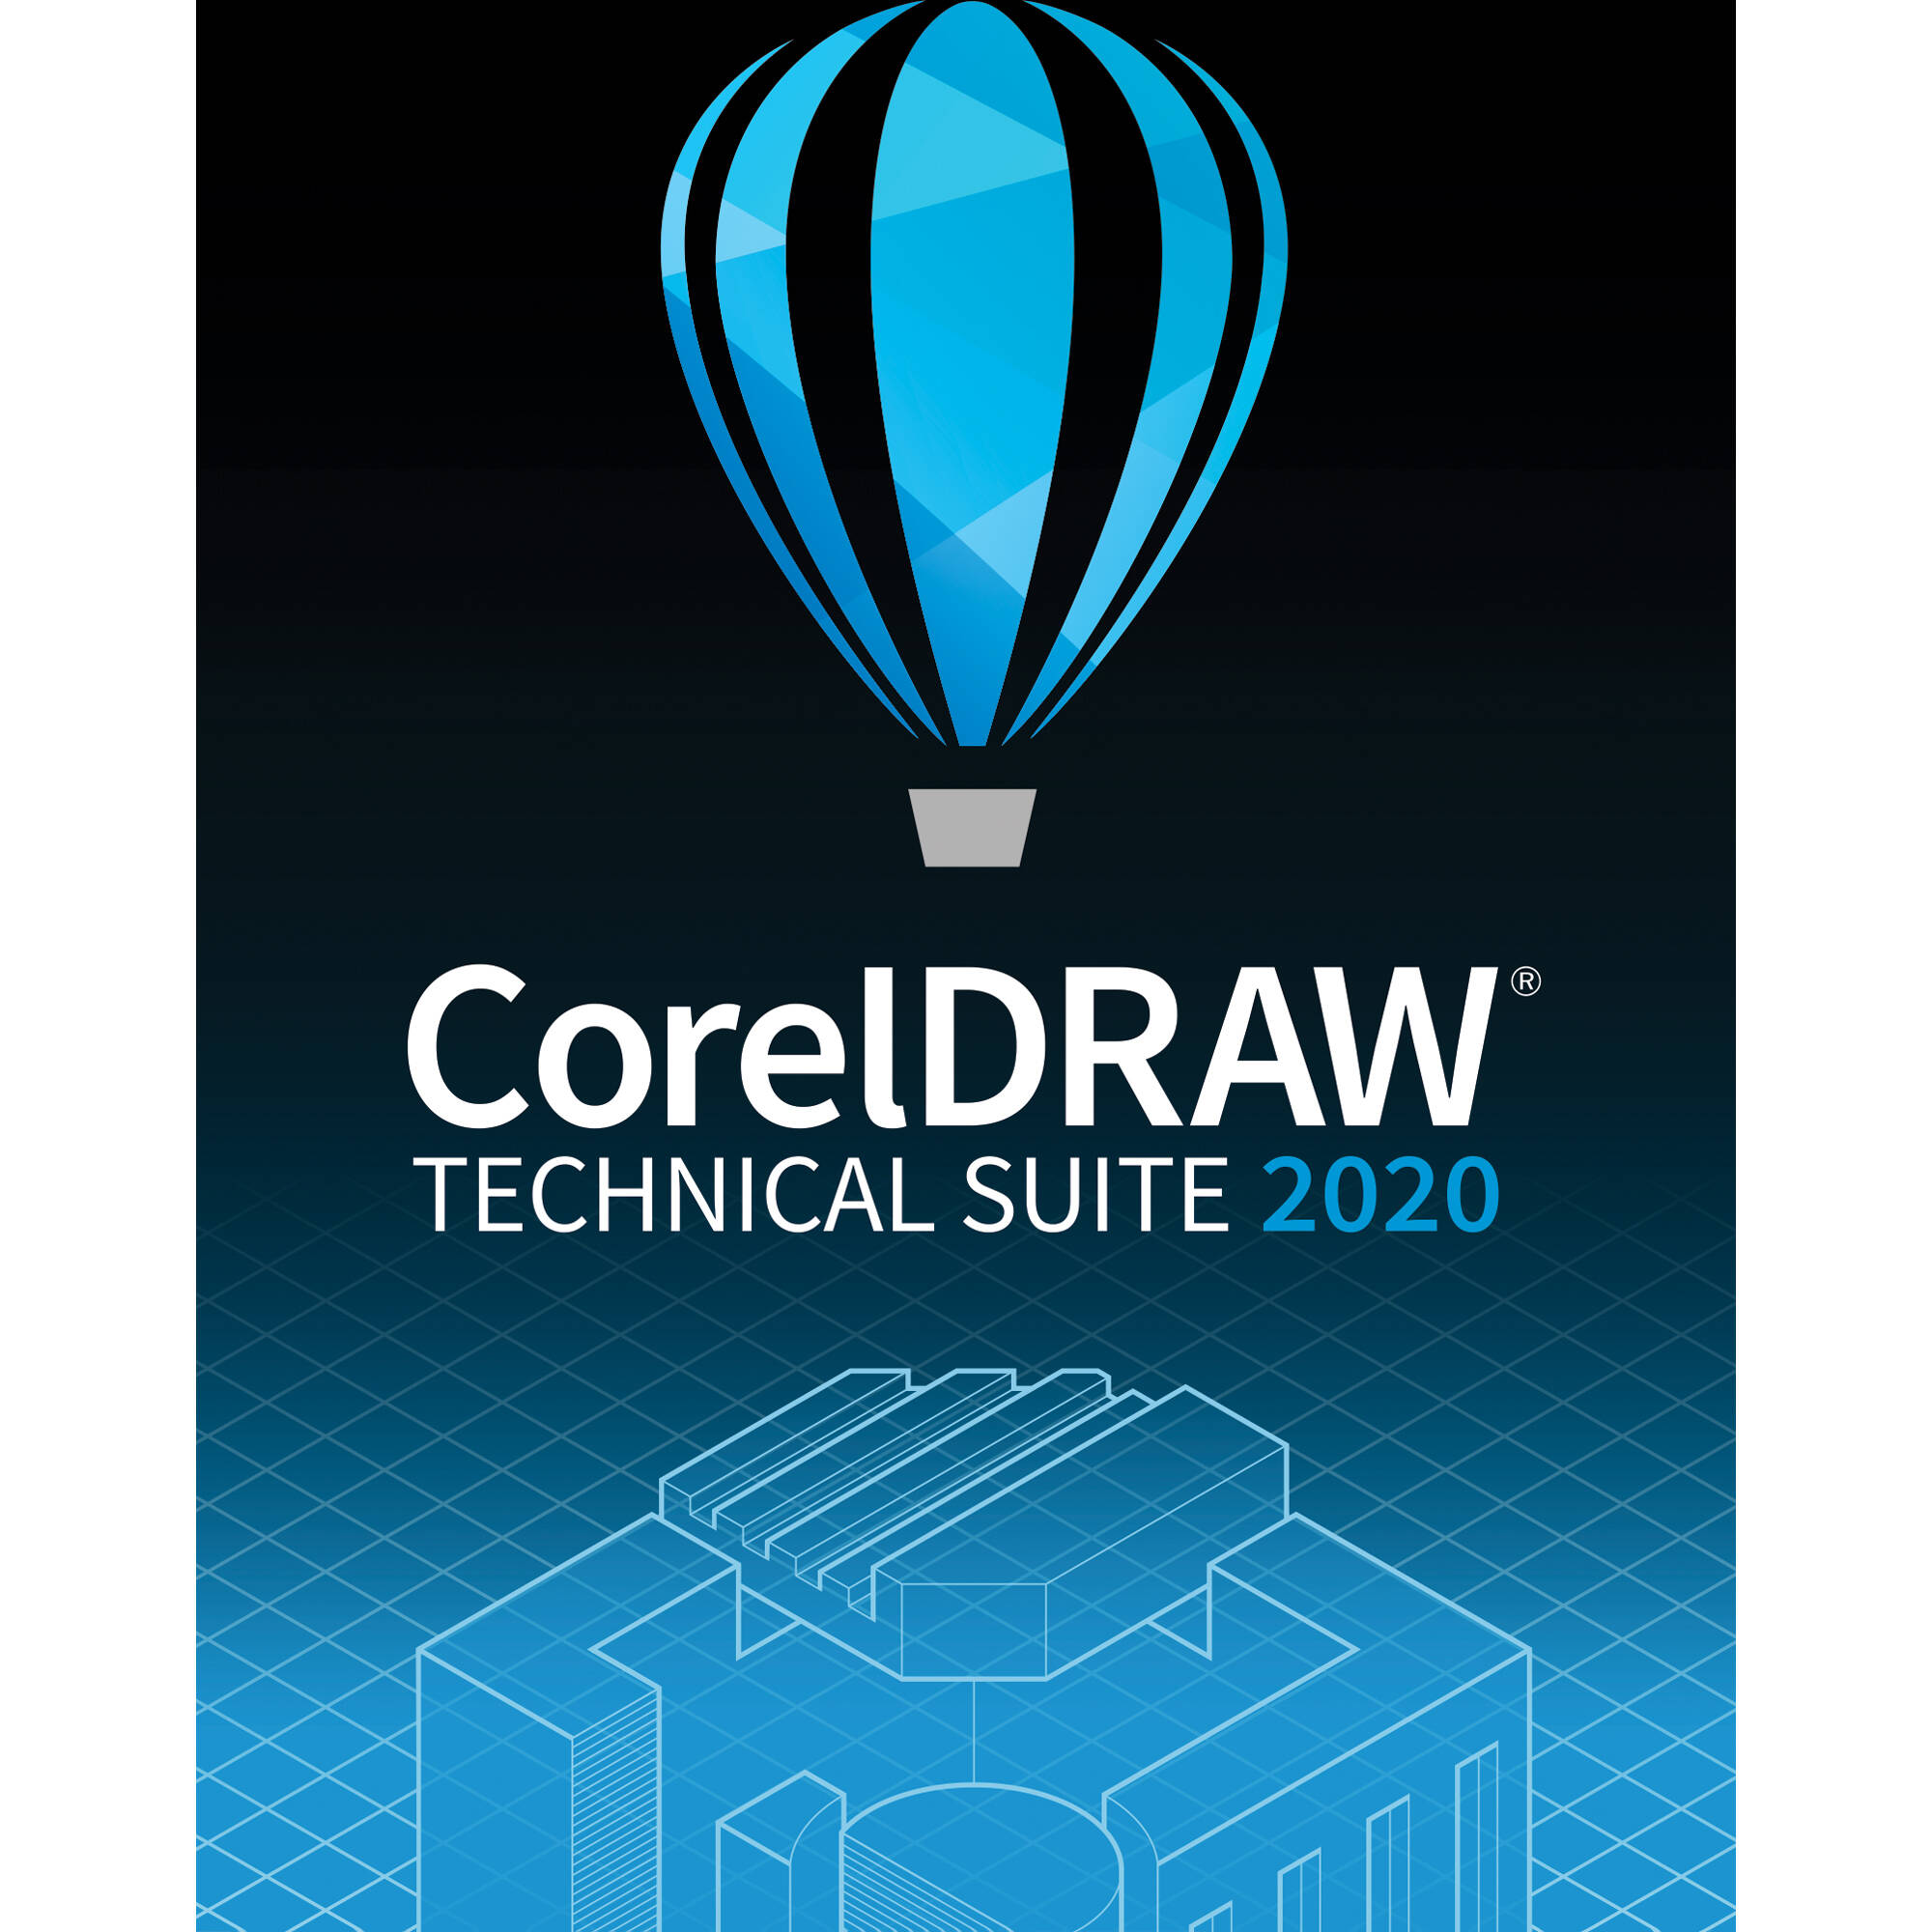 Corel suite. Coreldraw. Coreldraw Technical Suite 2020. Coreldraw Graphics Suite. Coreldraw Graphics Suite 2020.